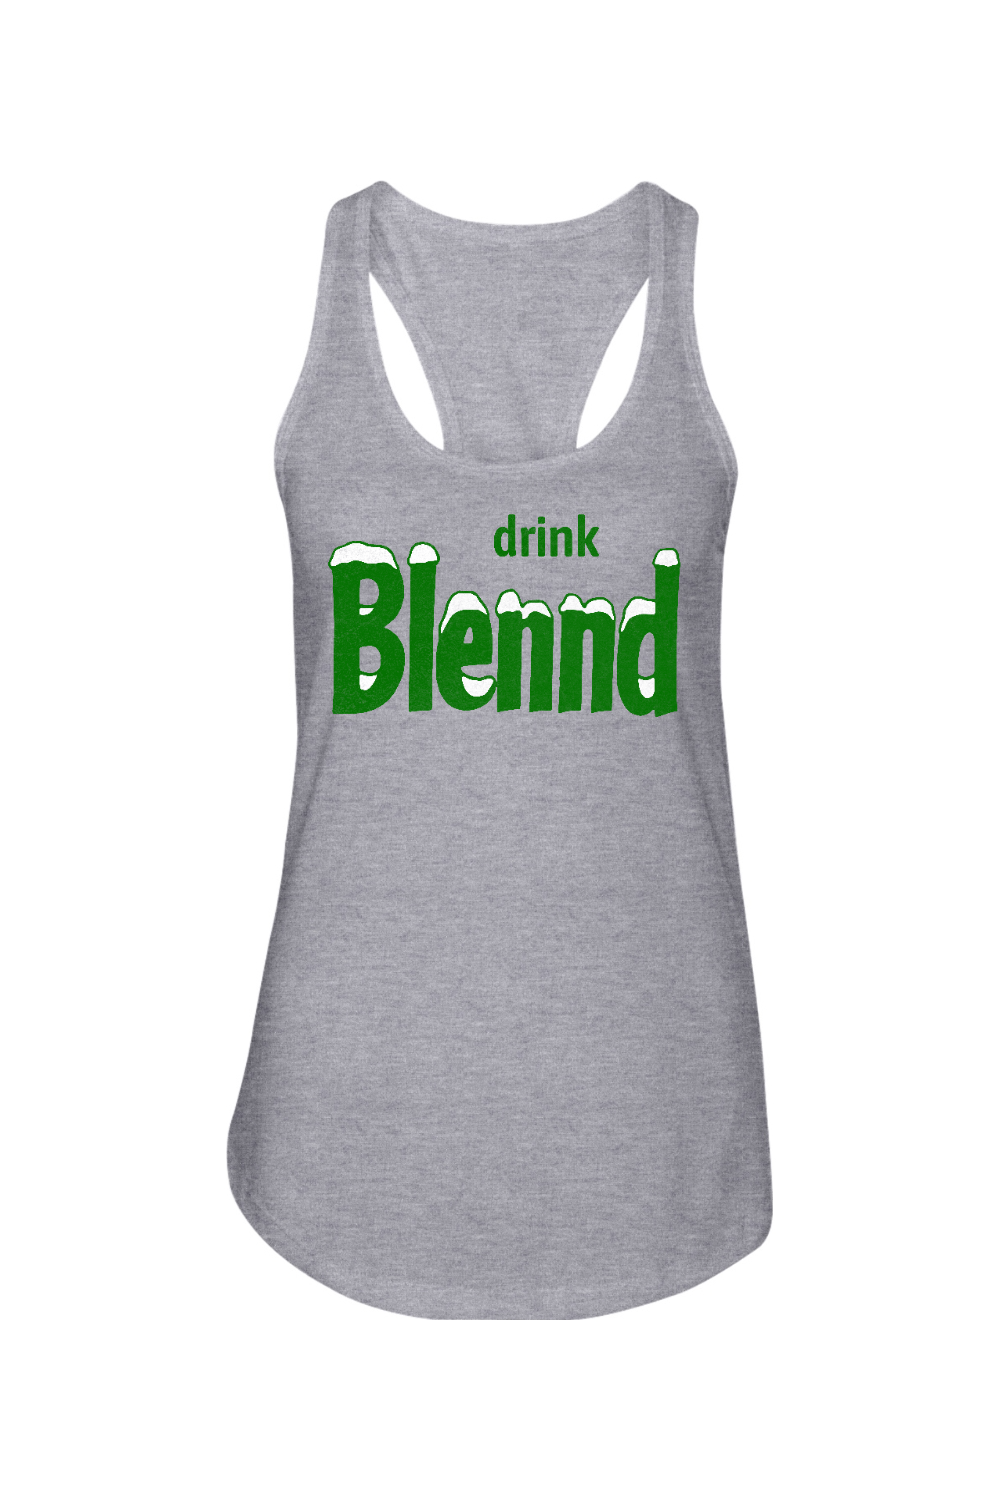 Drink Blennd - Ladies Racerback Tank - Yinzylvania